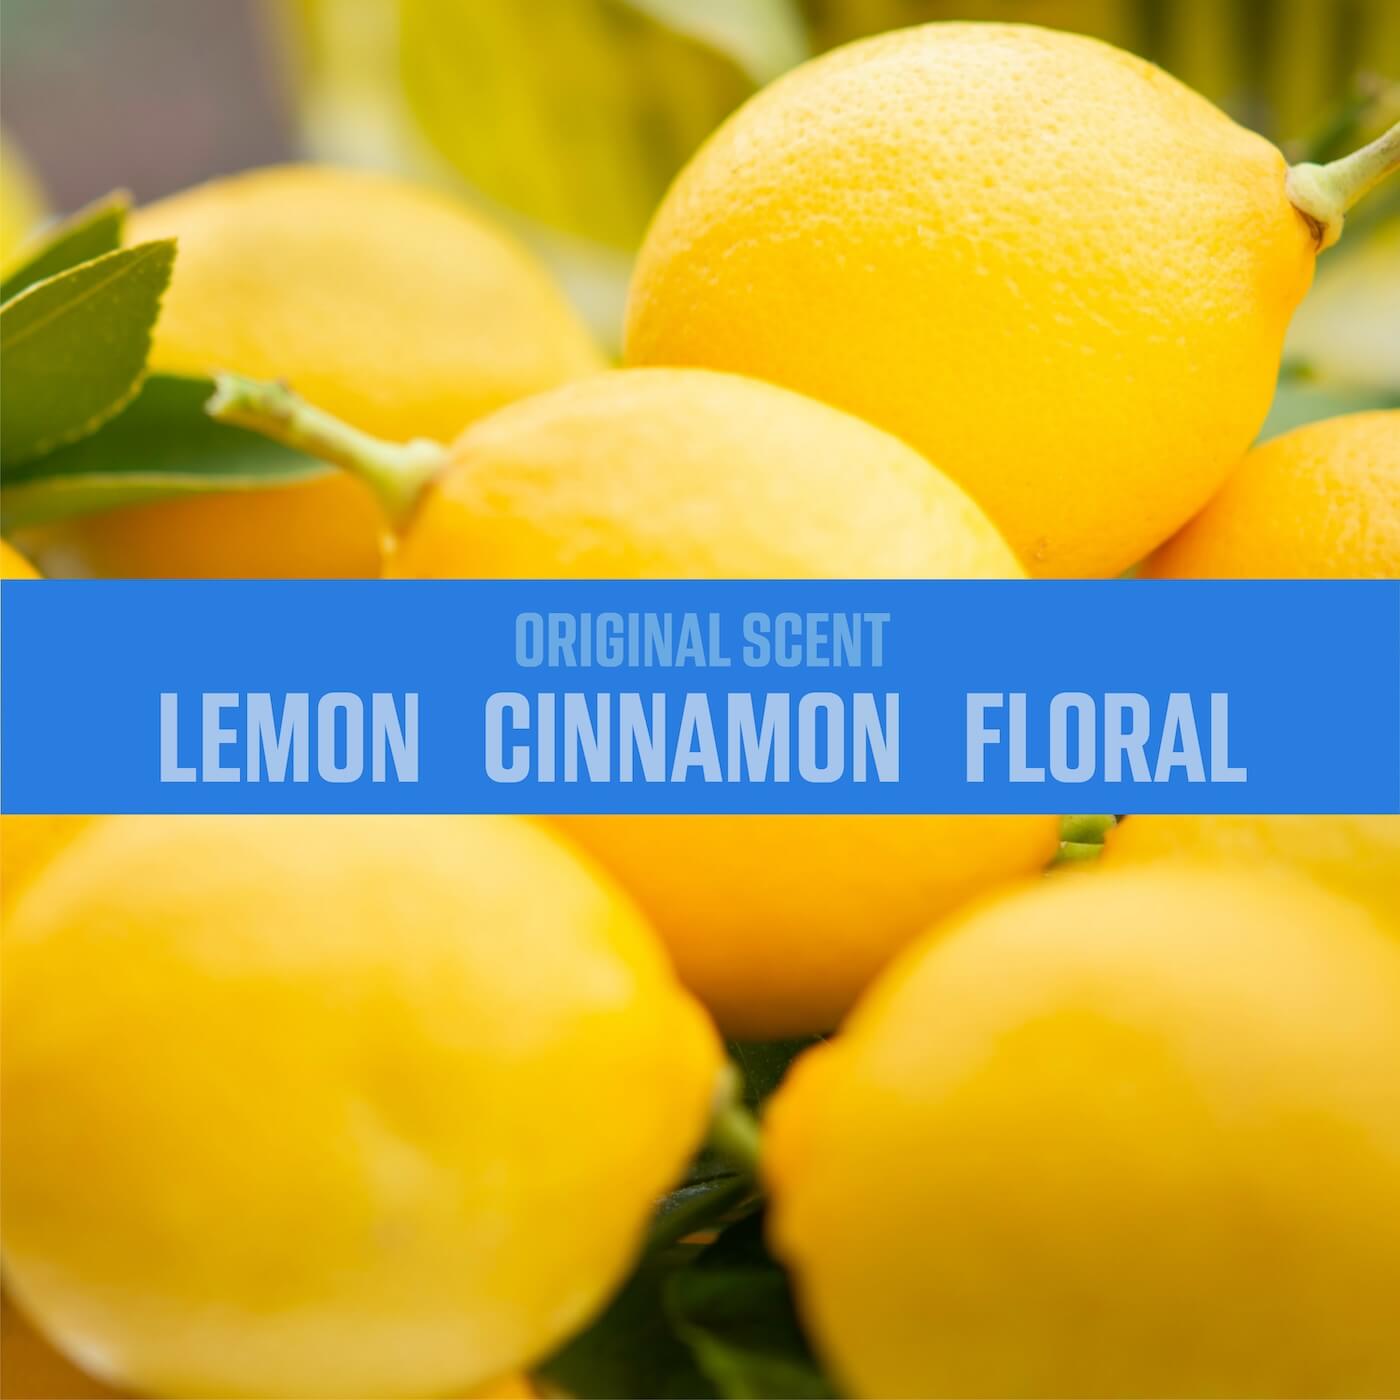 Original scent: Lemon, cinnamon and floral 